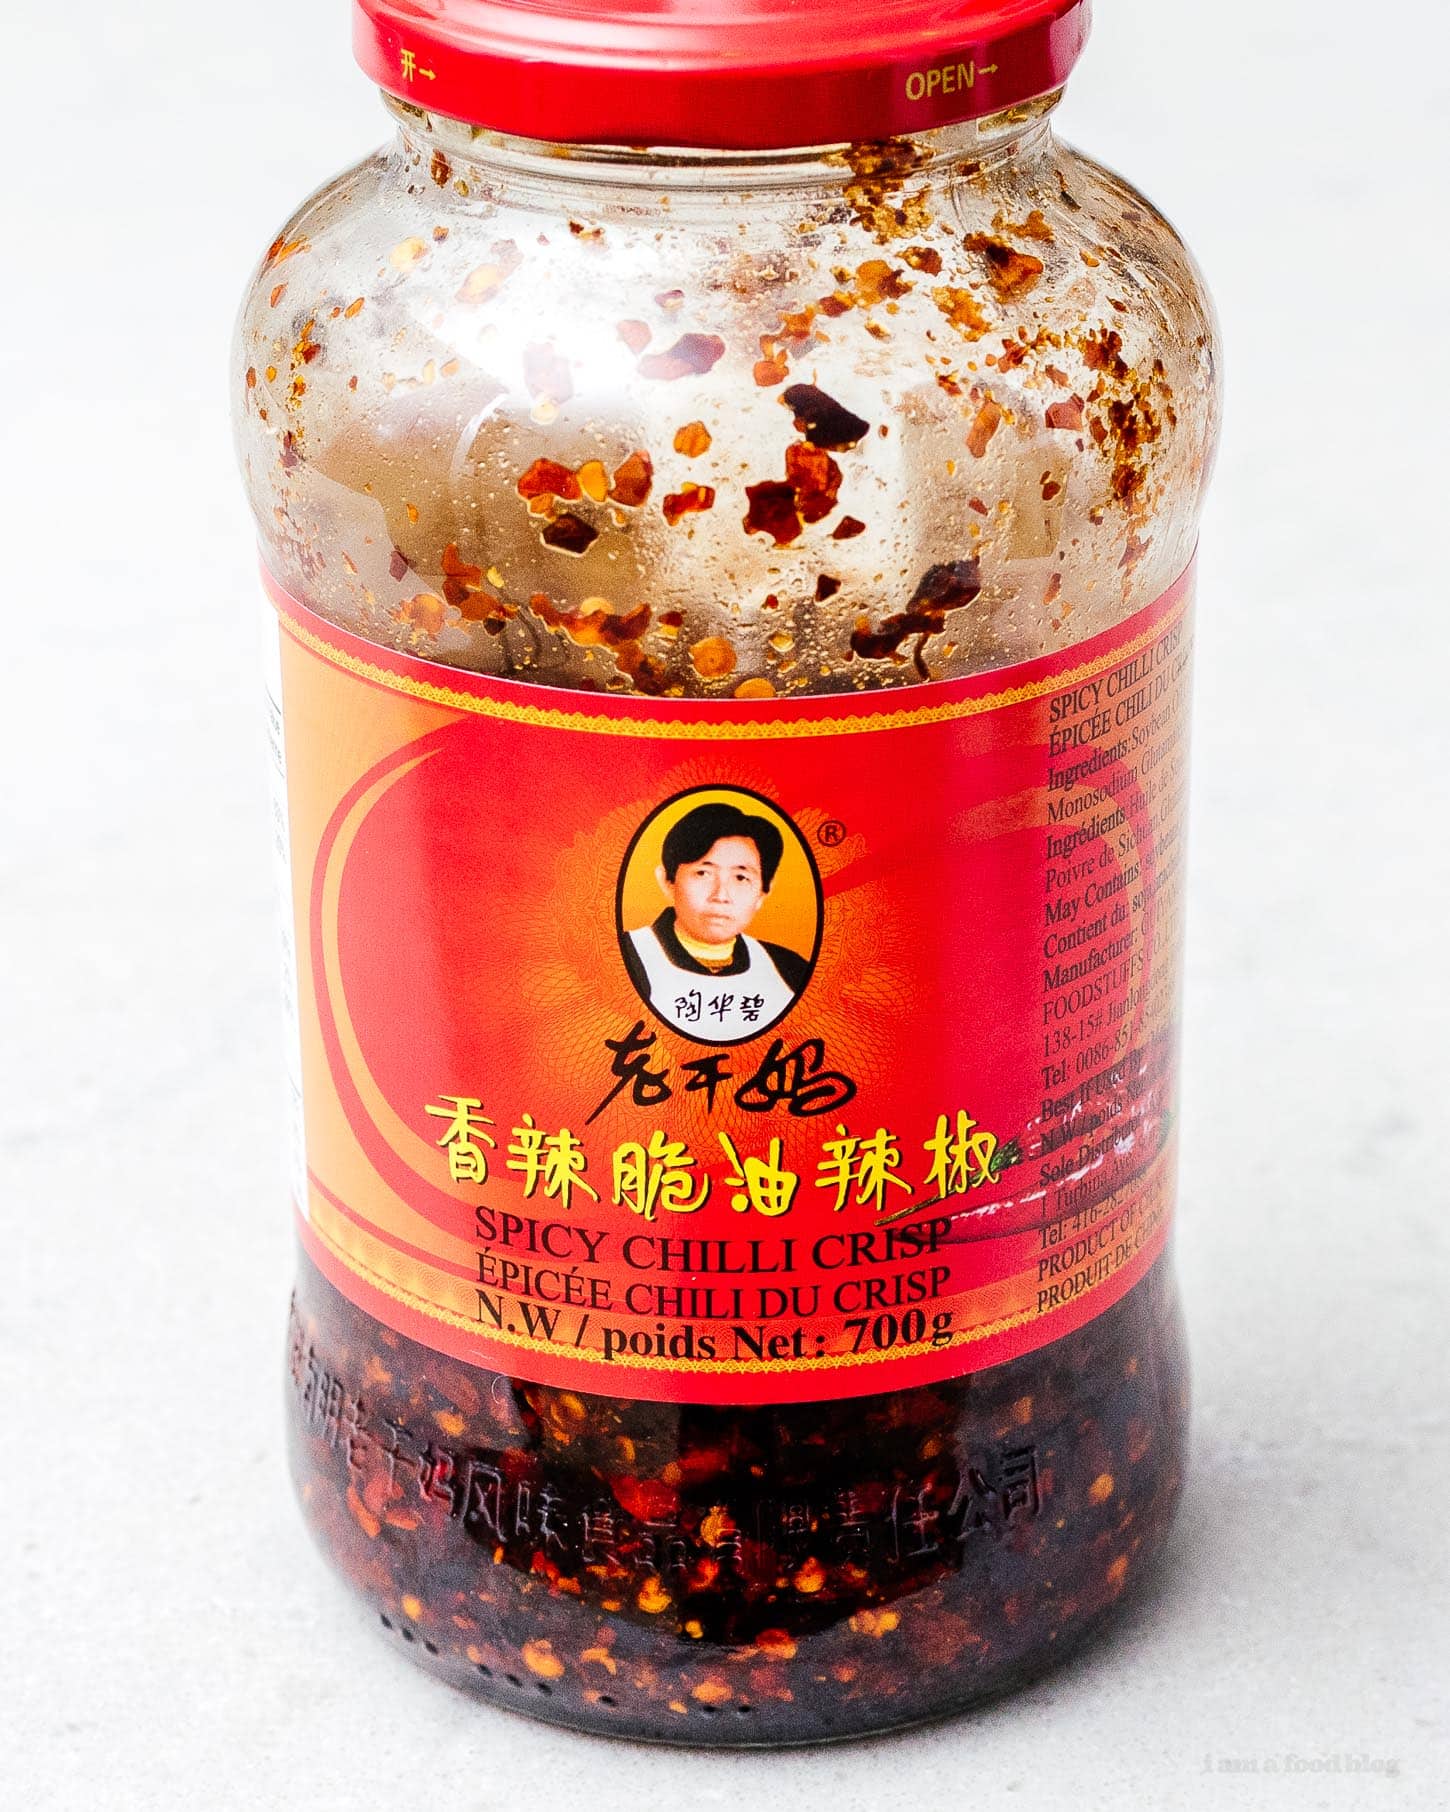 Lao gan mi crispy chili | www.iamafoodblog.com